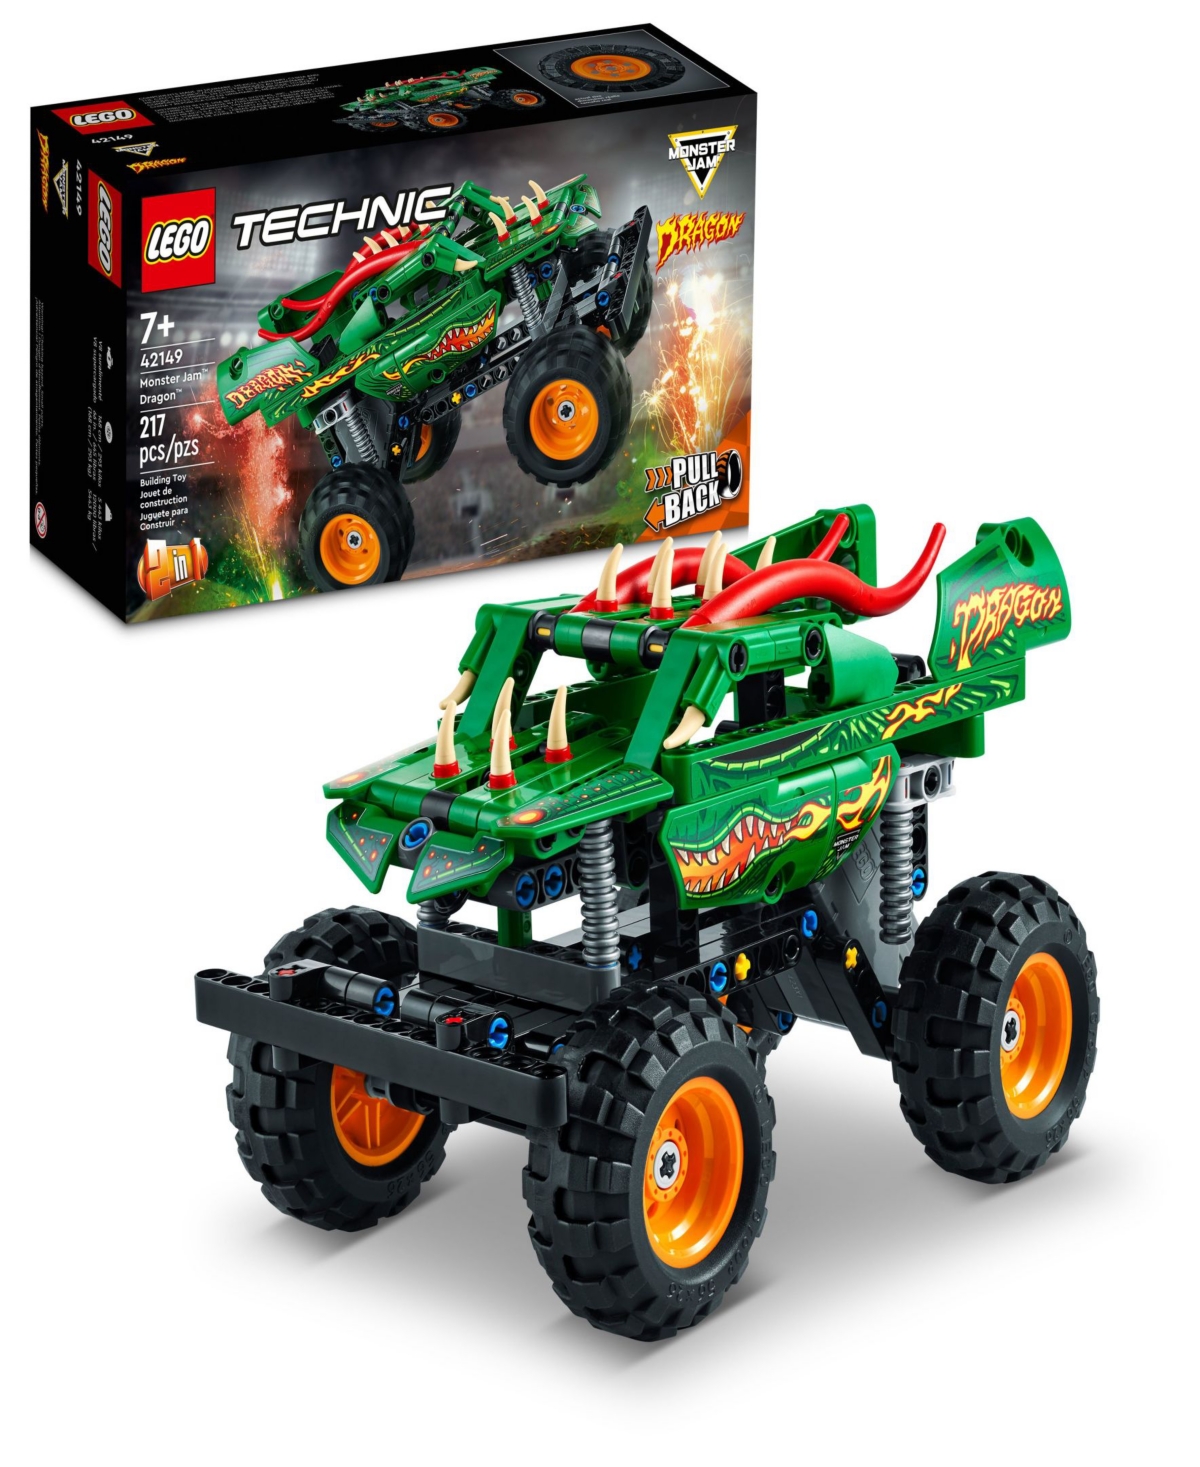 Lego Technic Monster Jam Dragon 42149 Toy Truck Building Set In Multicolor